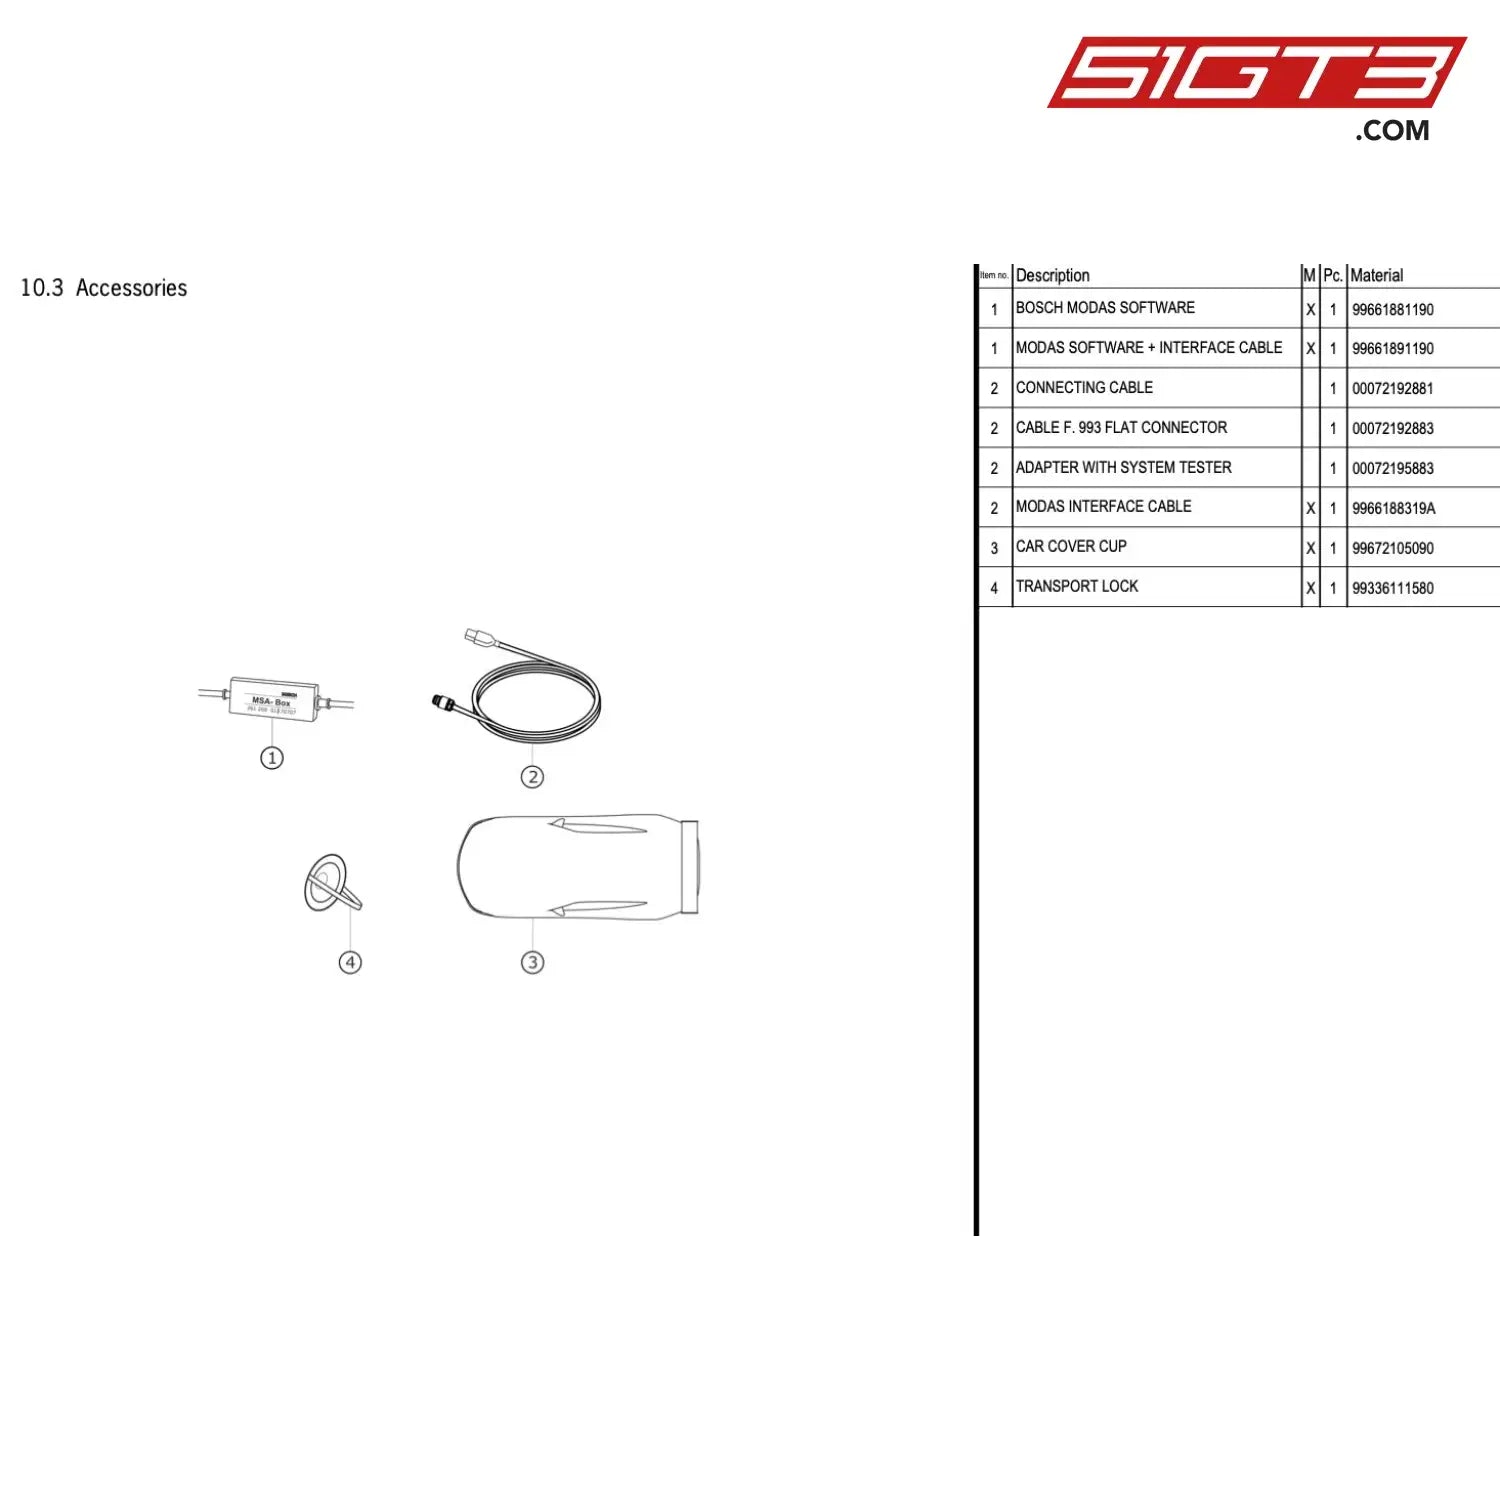 Modas Interface Cable - 9966188319A [Porsche 911 Gt3 Cup Type 996] Accessories